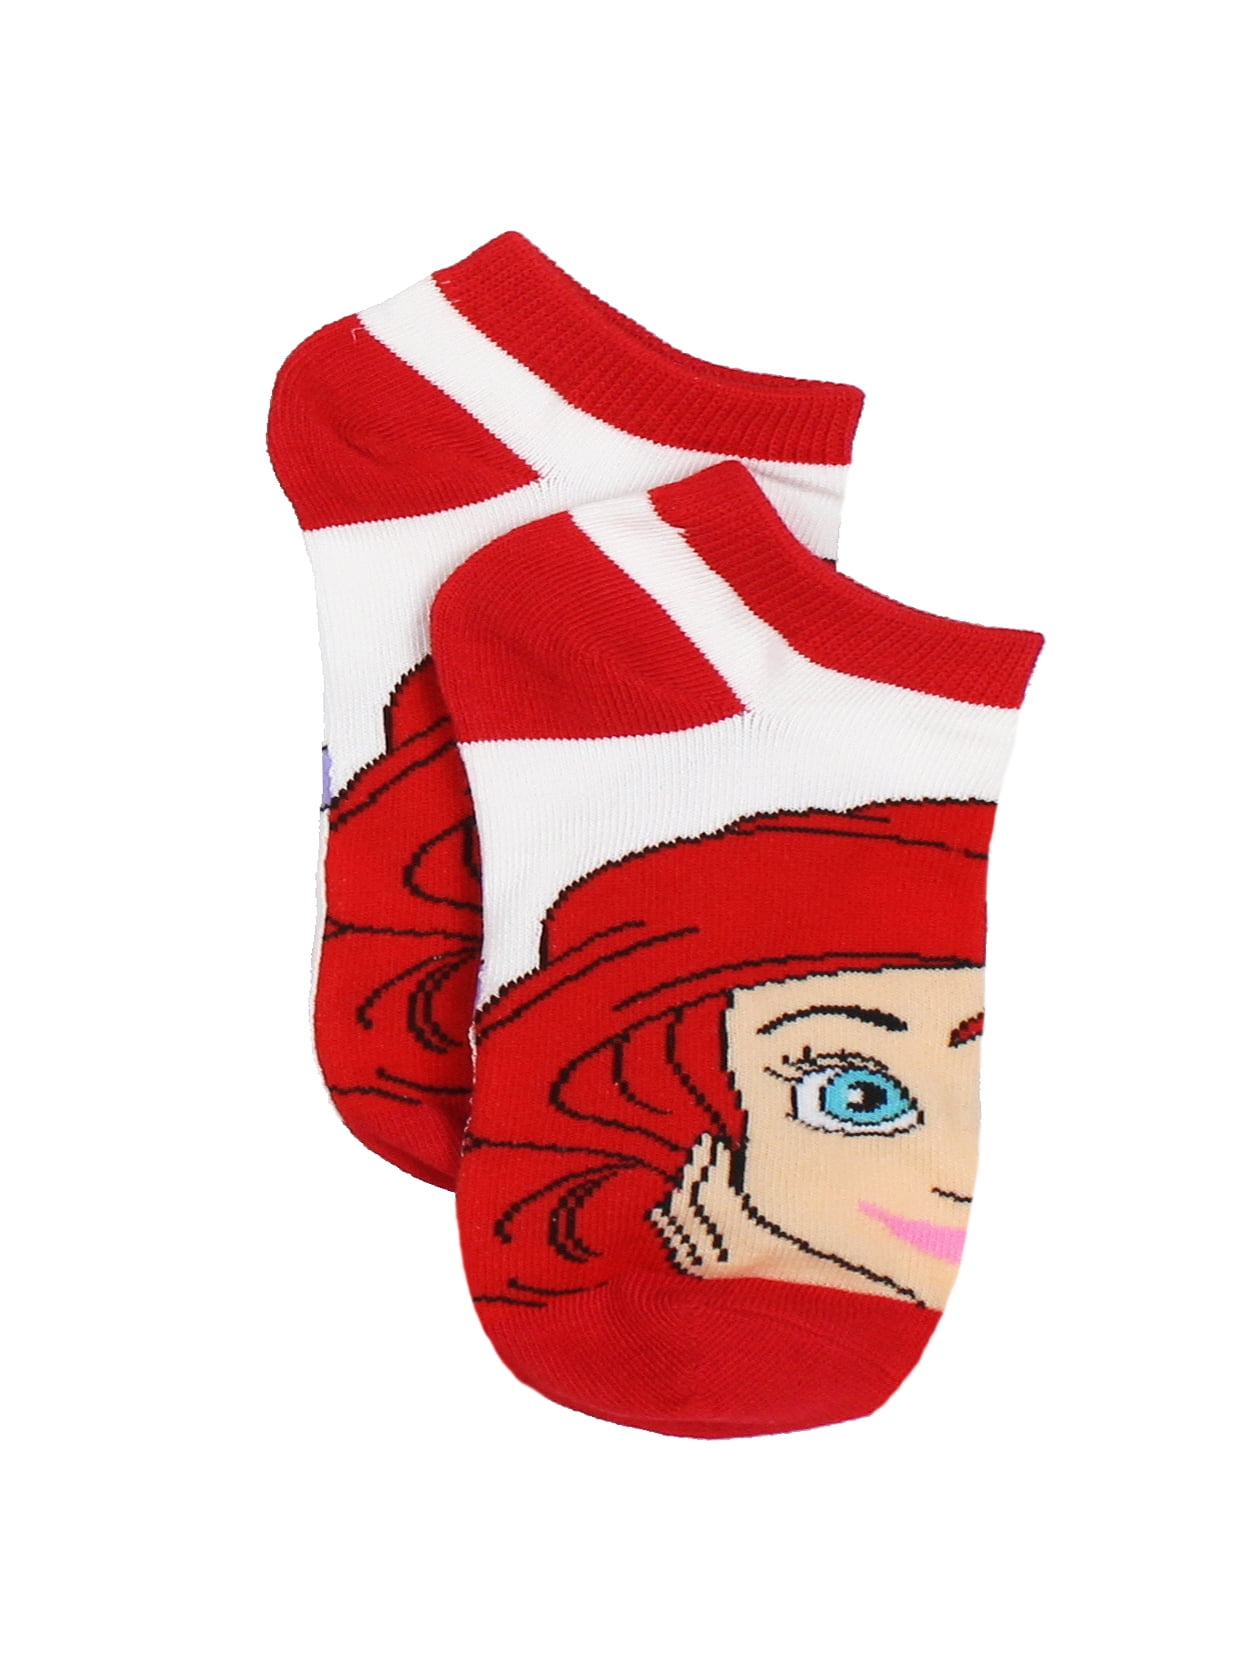 Disney Parks Ariel Little Mermaid Adult Socks Authentic Disney NWT Free Shipping